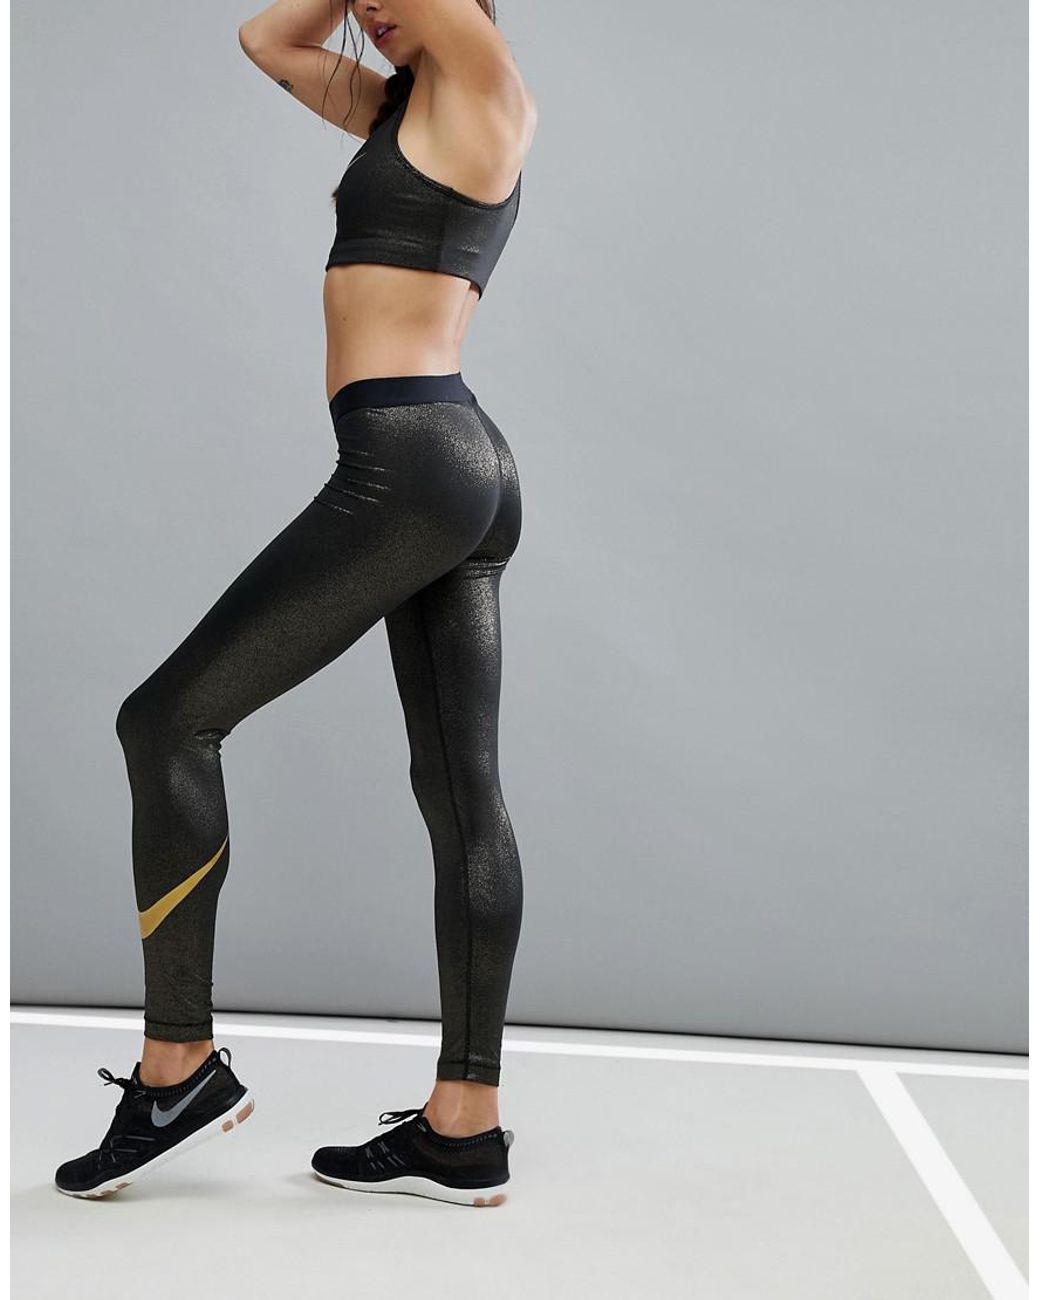 Nike Pro Training Legging In Gold Sparkle in Metallic | Lyst UK